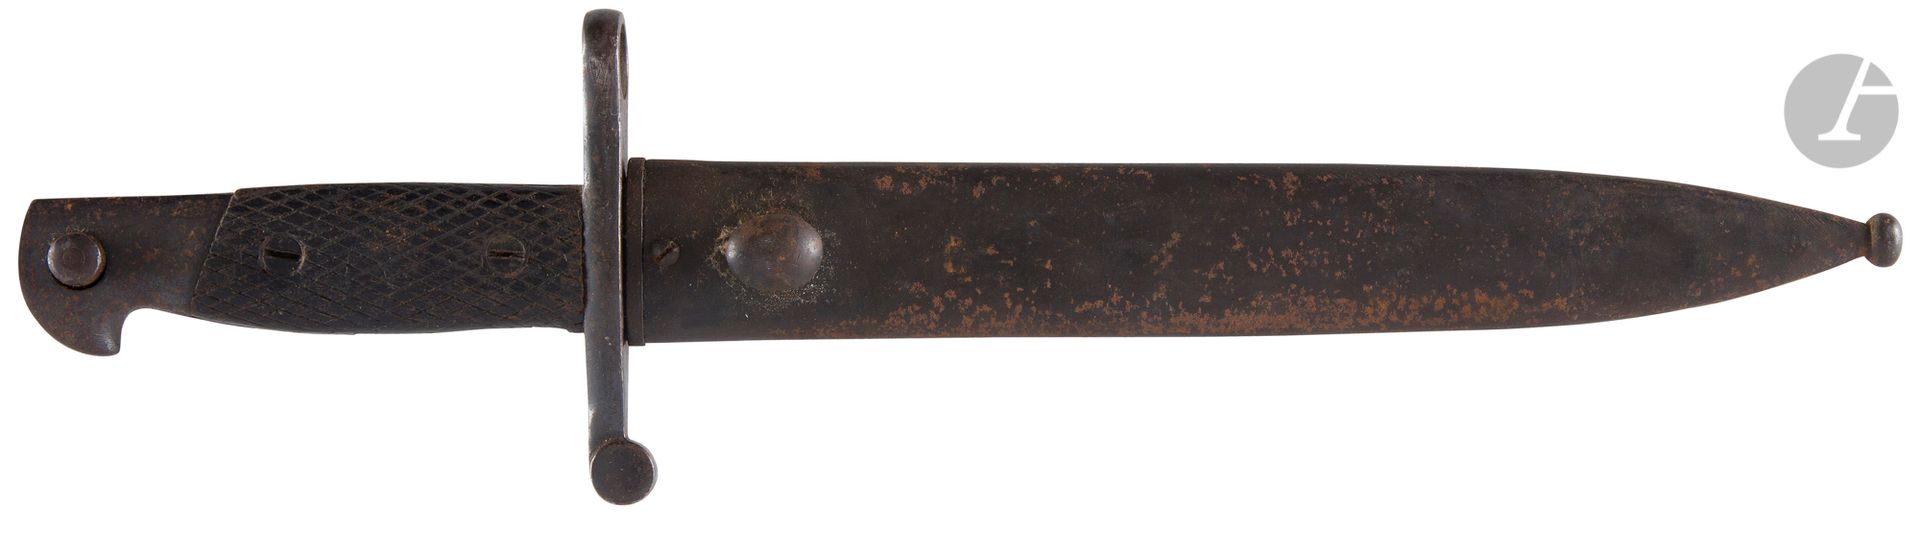 Null 西班牙
1941年款刺刀 "波洛"。
手柄上有方形的木板。铁架子。刀片上盖有印章。古铜色铁片的刀鞘。
刀片长度：24.5厘米 - 总长度：37厘米。
&hellip;